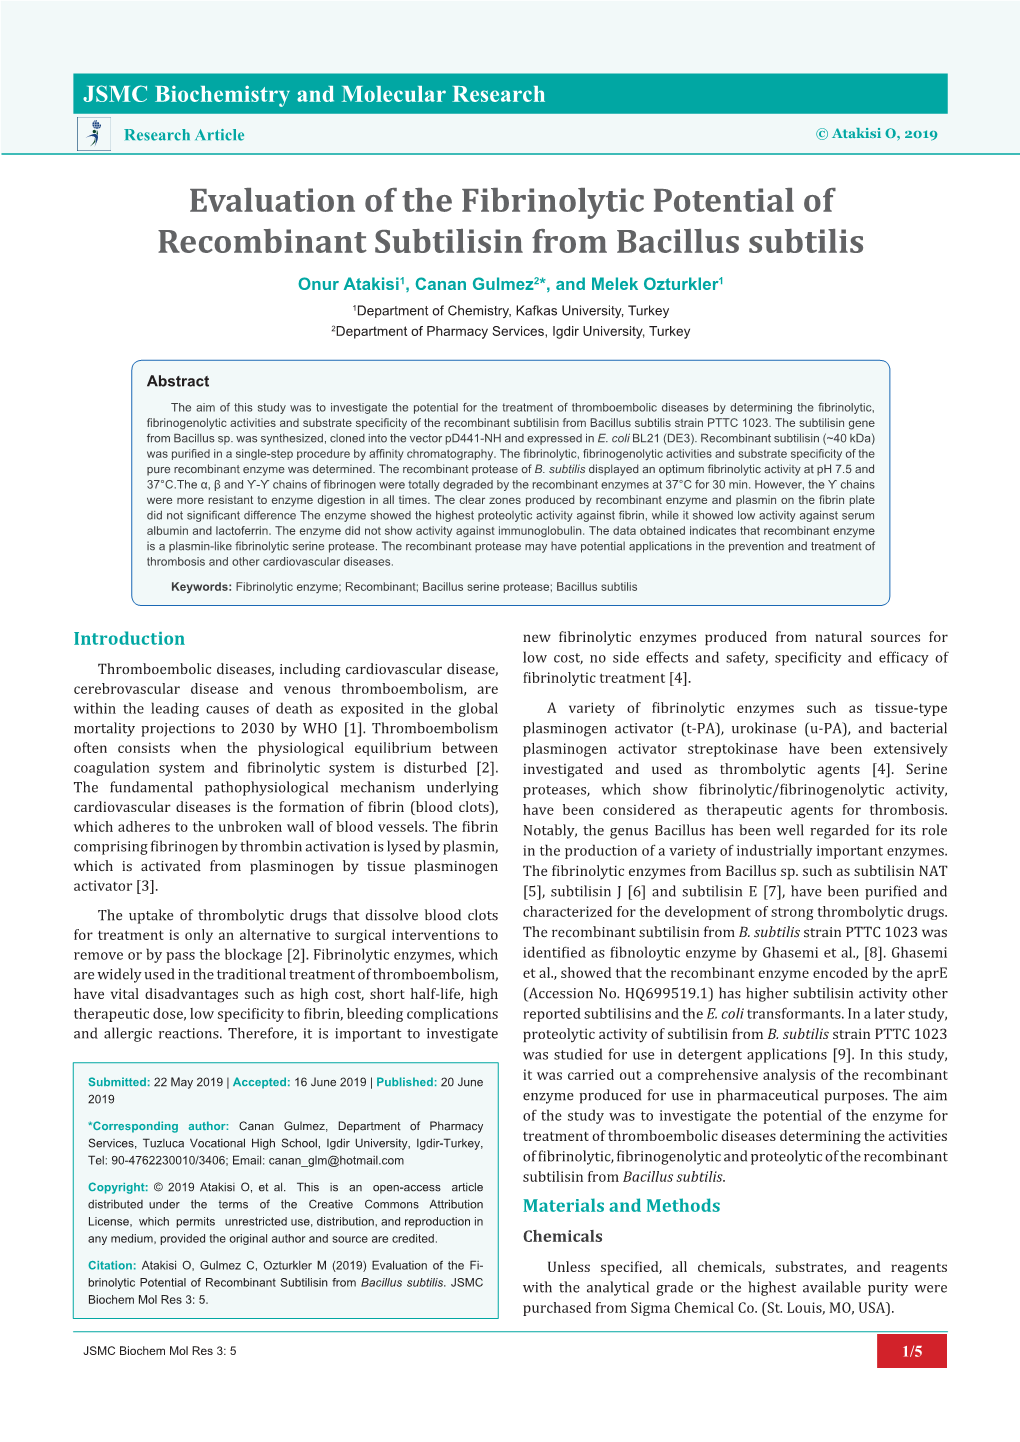 Evaluation of the Fibrinolytic Potential of Recombinant Subtilisin from Bacillus Subtilis